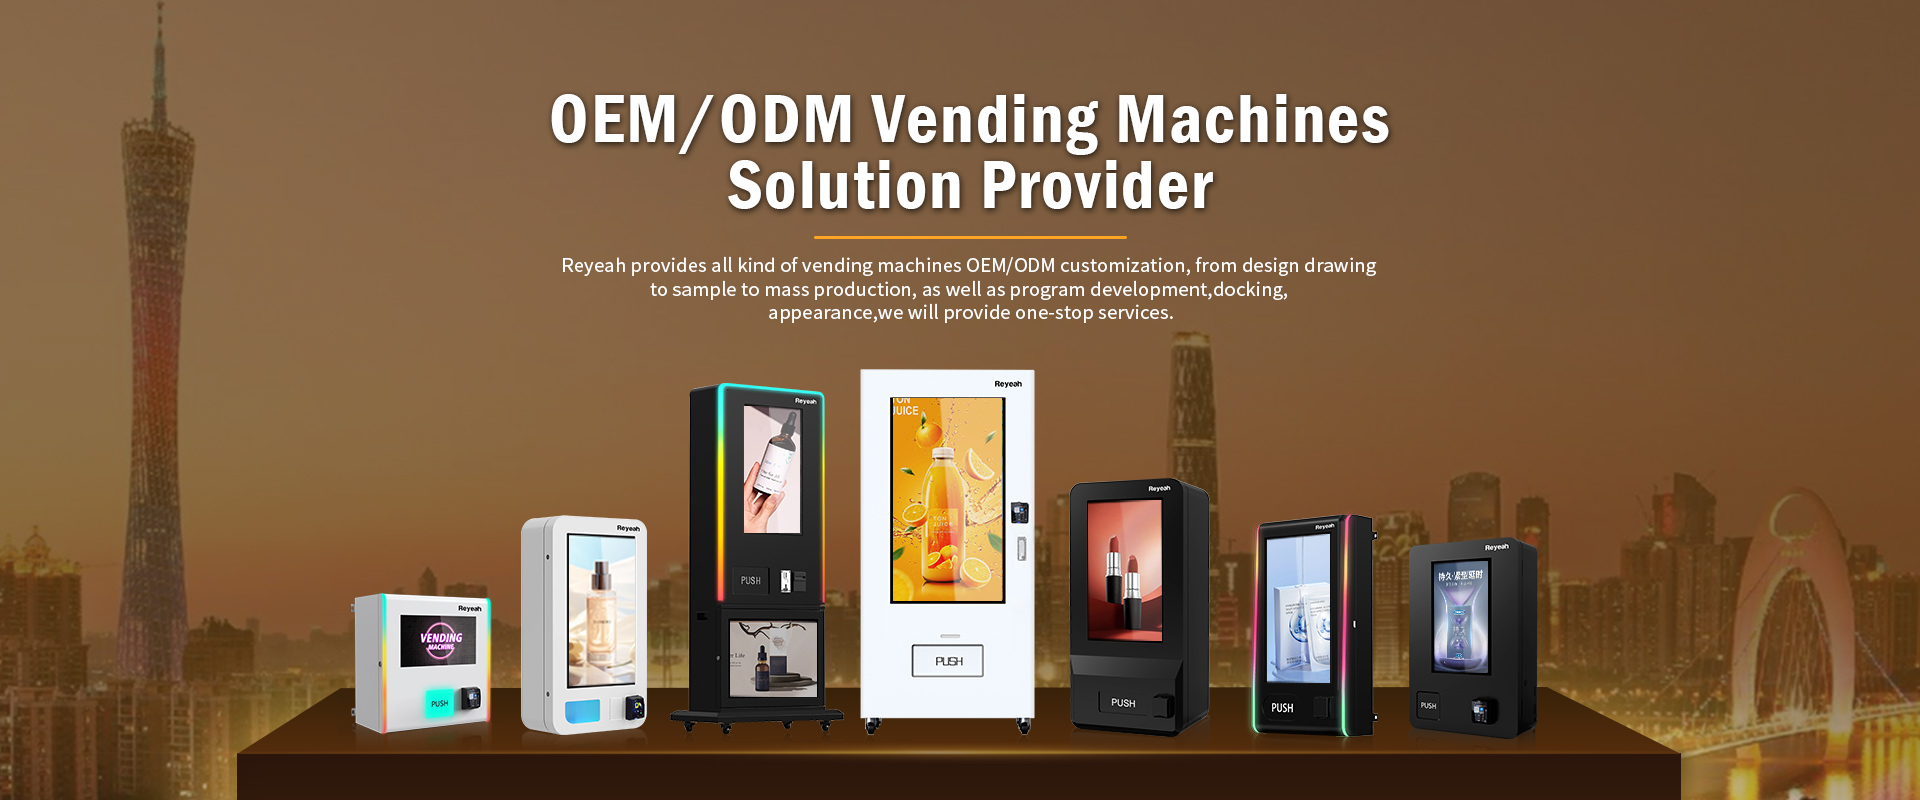 vending machine oem